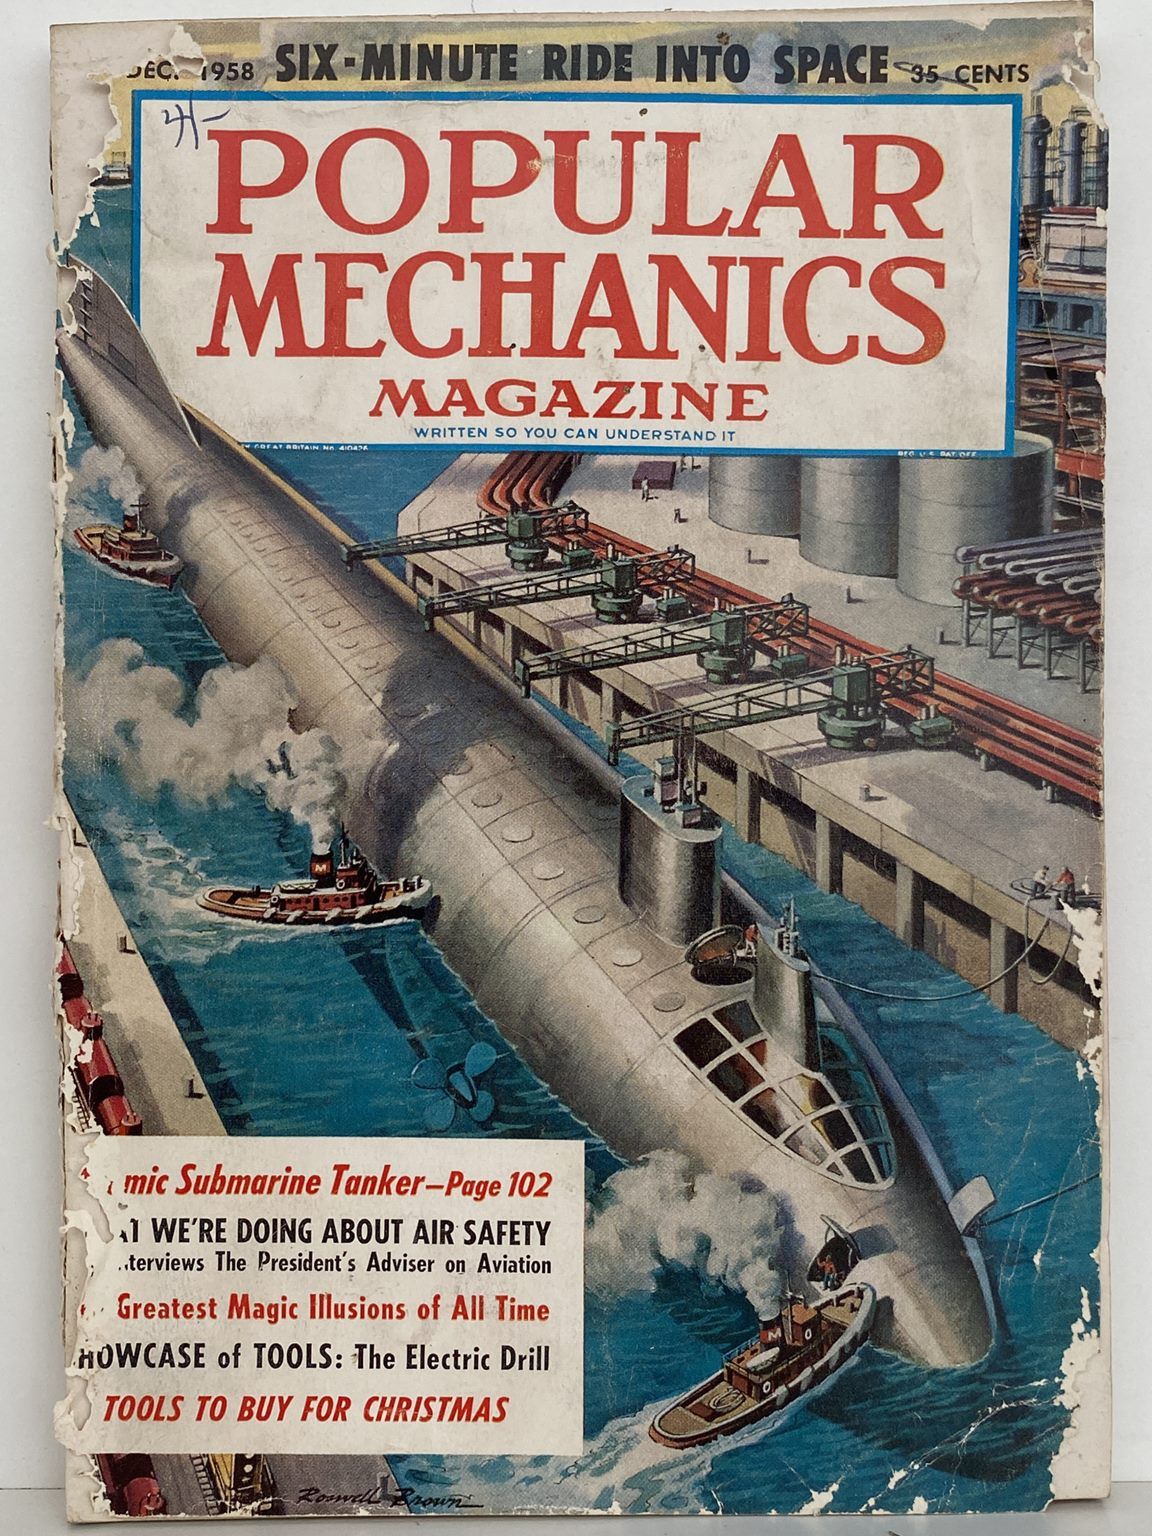 VINTAGE MAGAZINE: Popular Mechanics - Vol. 110, No. 6 - December 1958